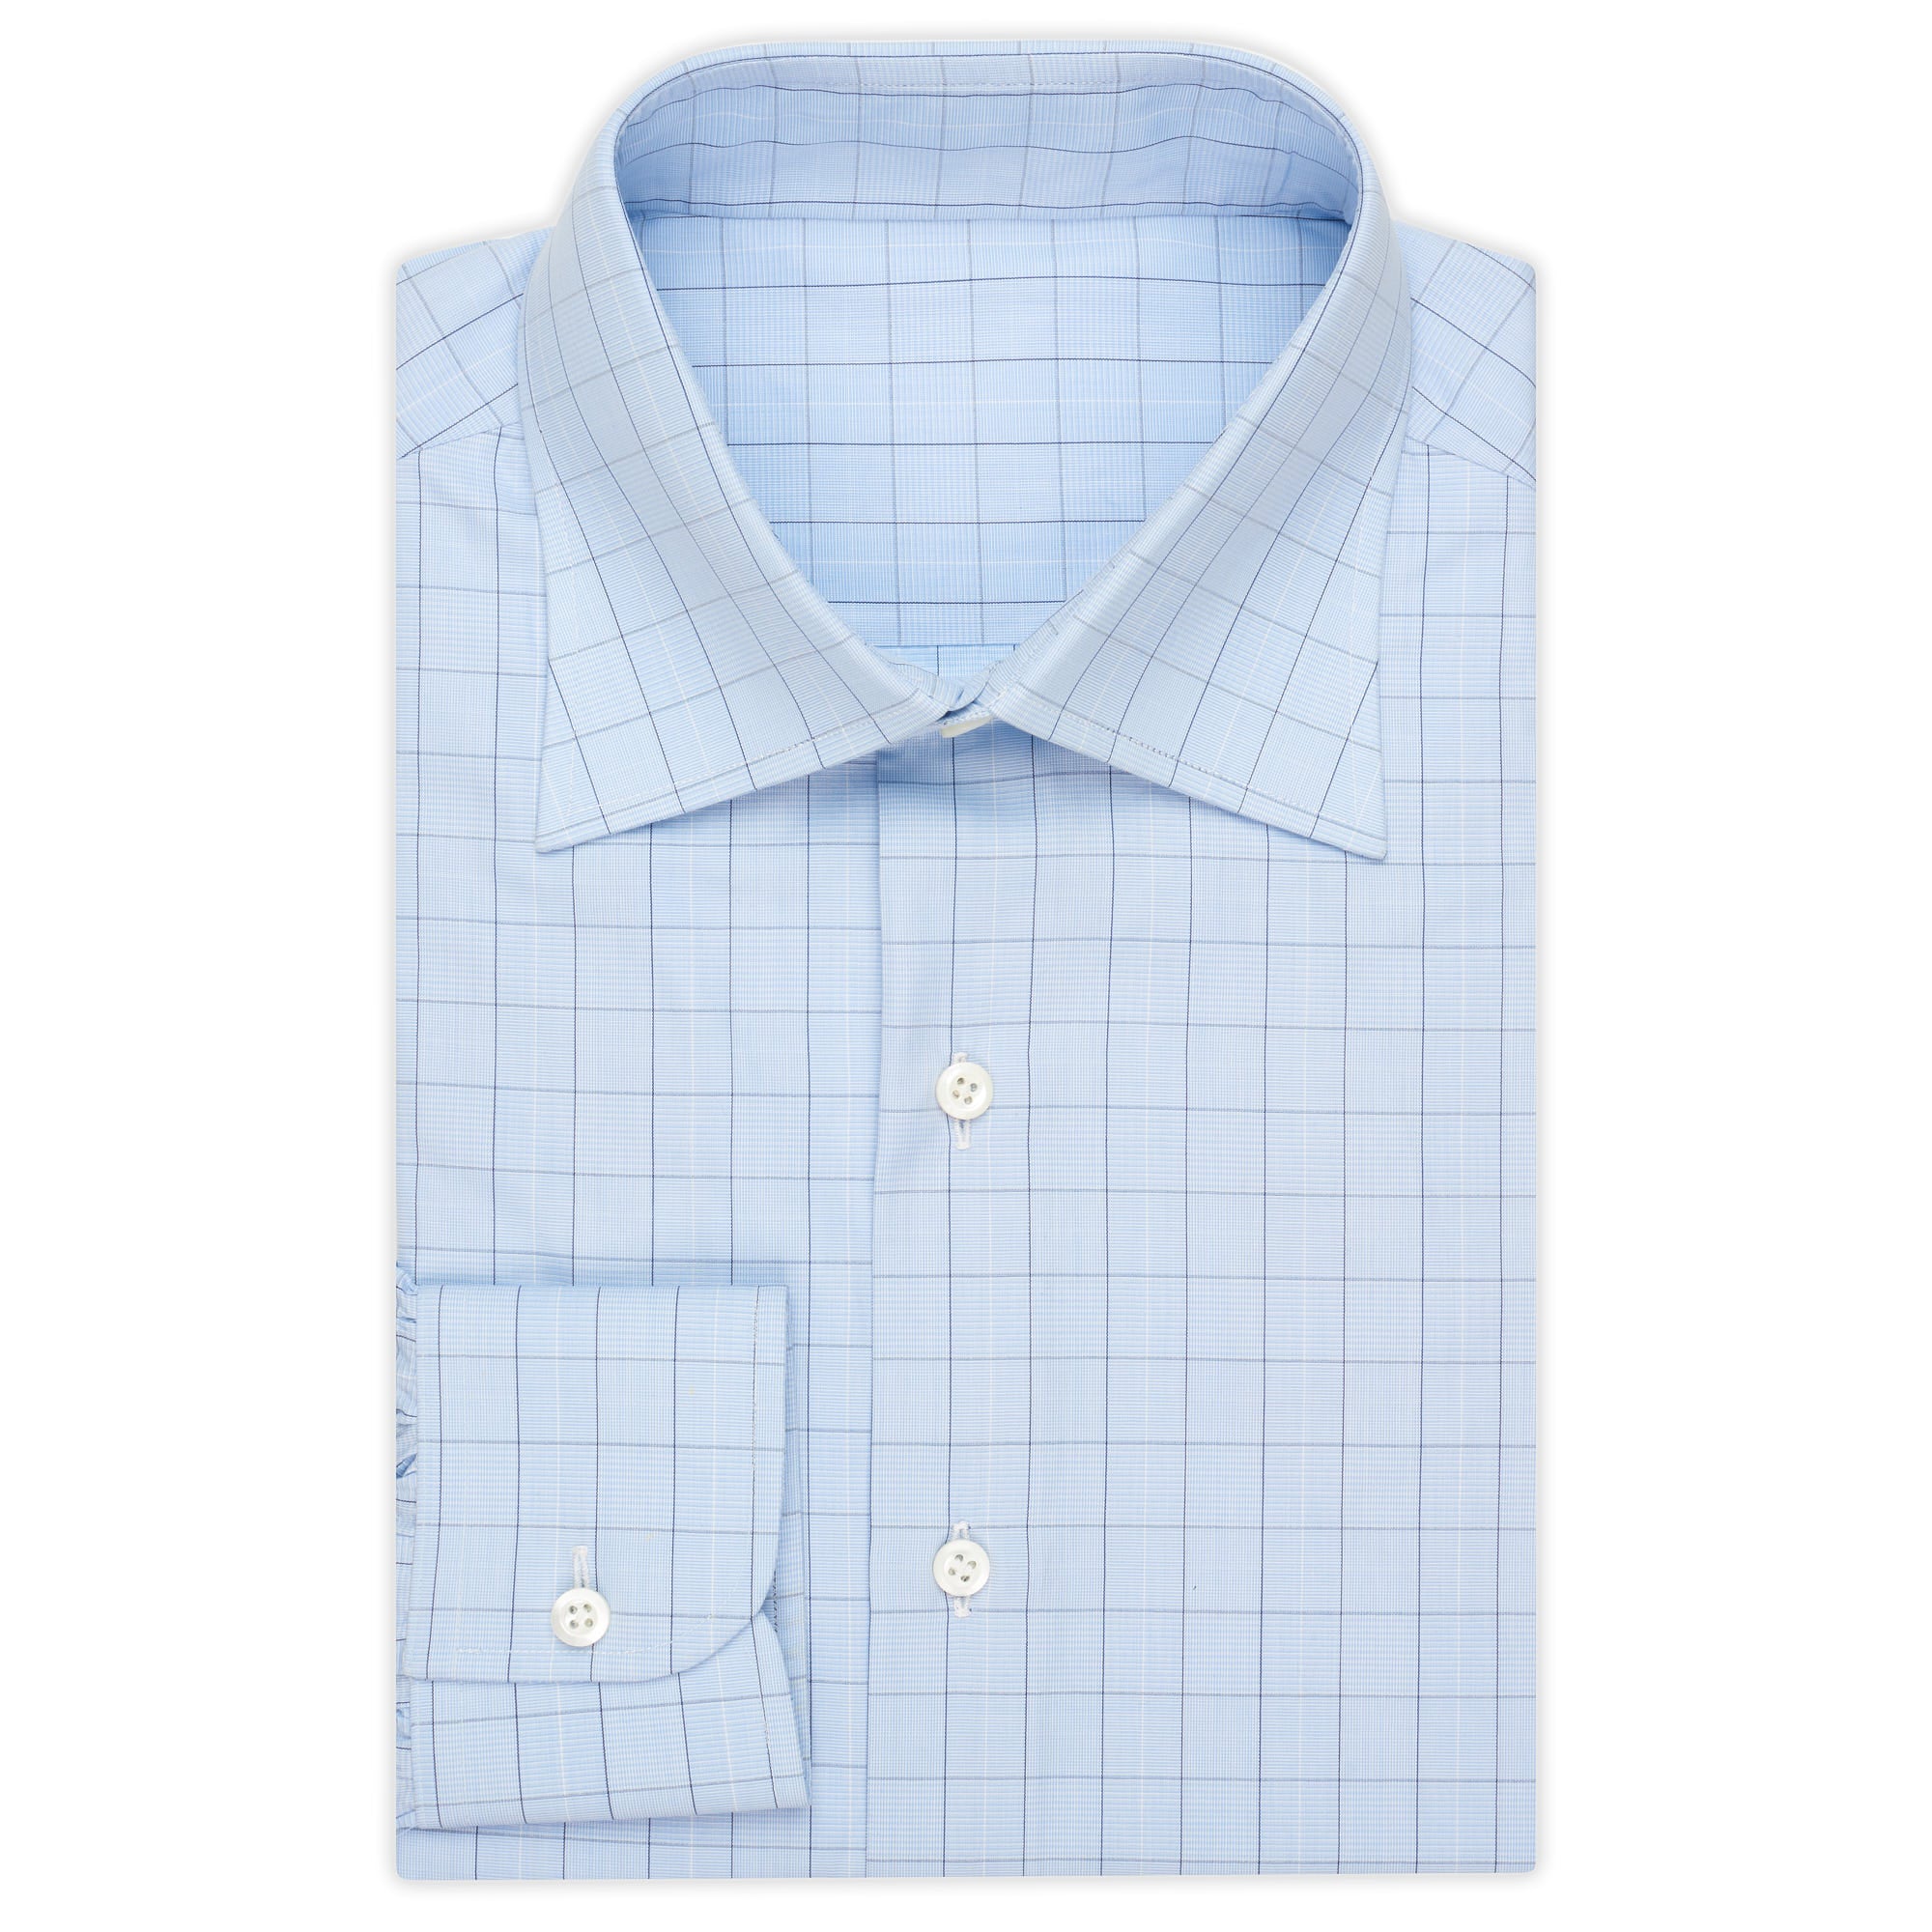 BESPOKE ATHENS Handmade Blue Plaid Cotton Dress Shirt 43 NEW US 17 Classic Fit BESPOKE ATHENS